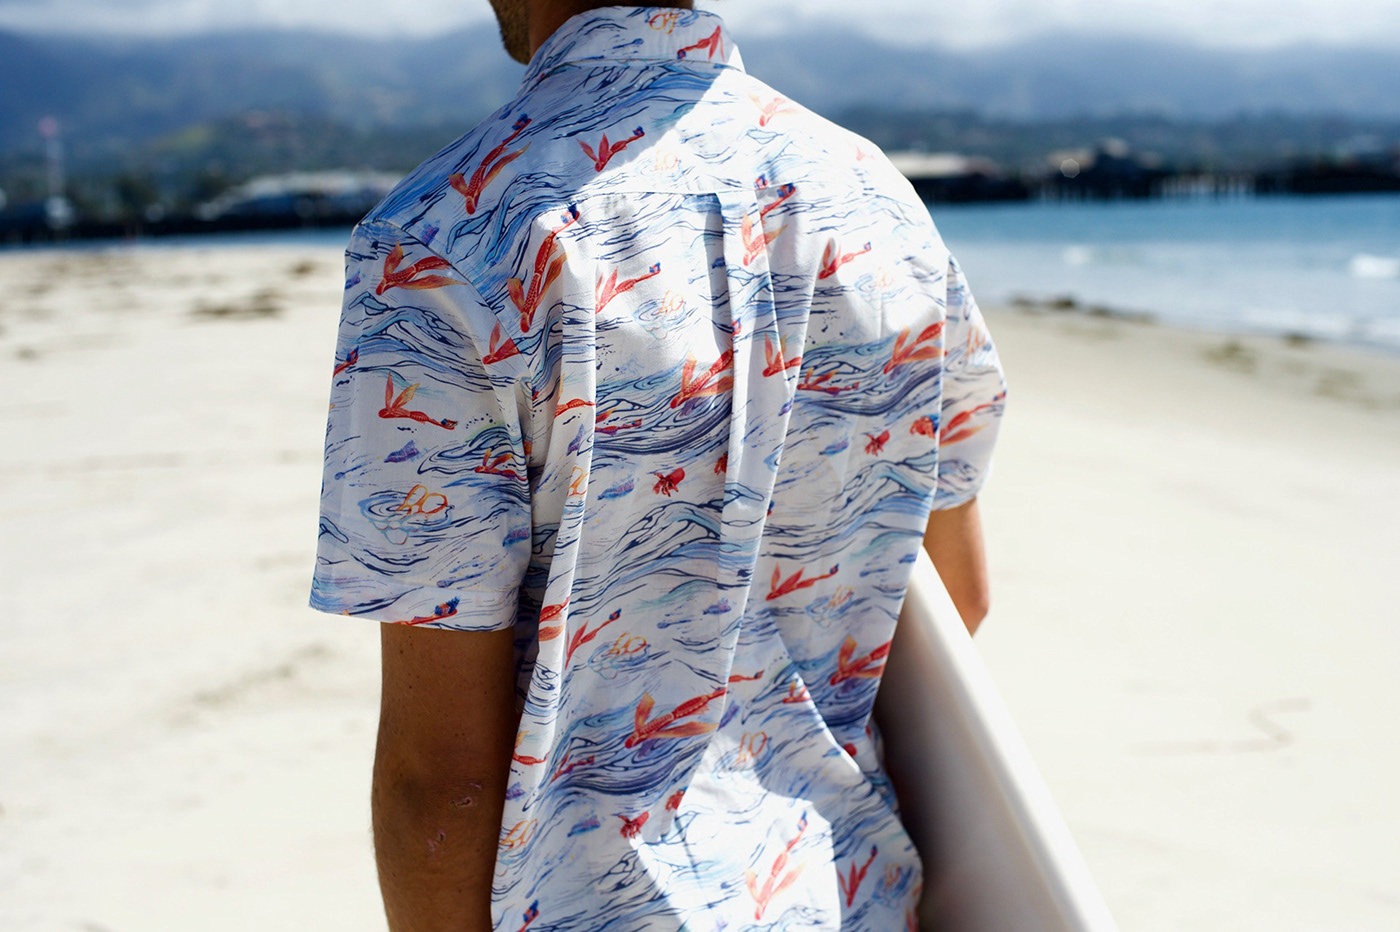 plastic pollution shirt product environment Sustainability beach avenger corona pattern